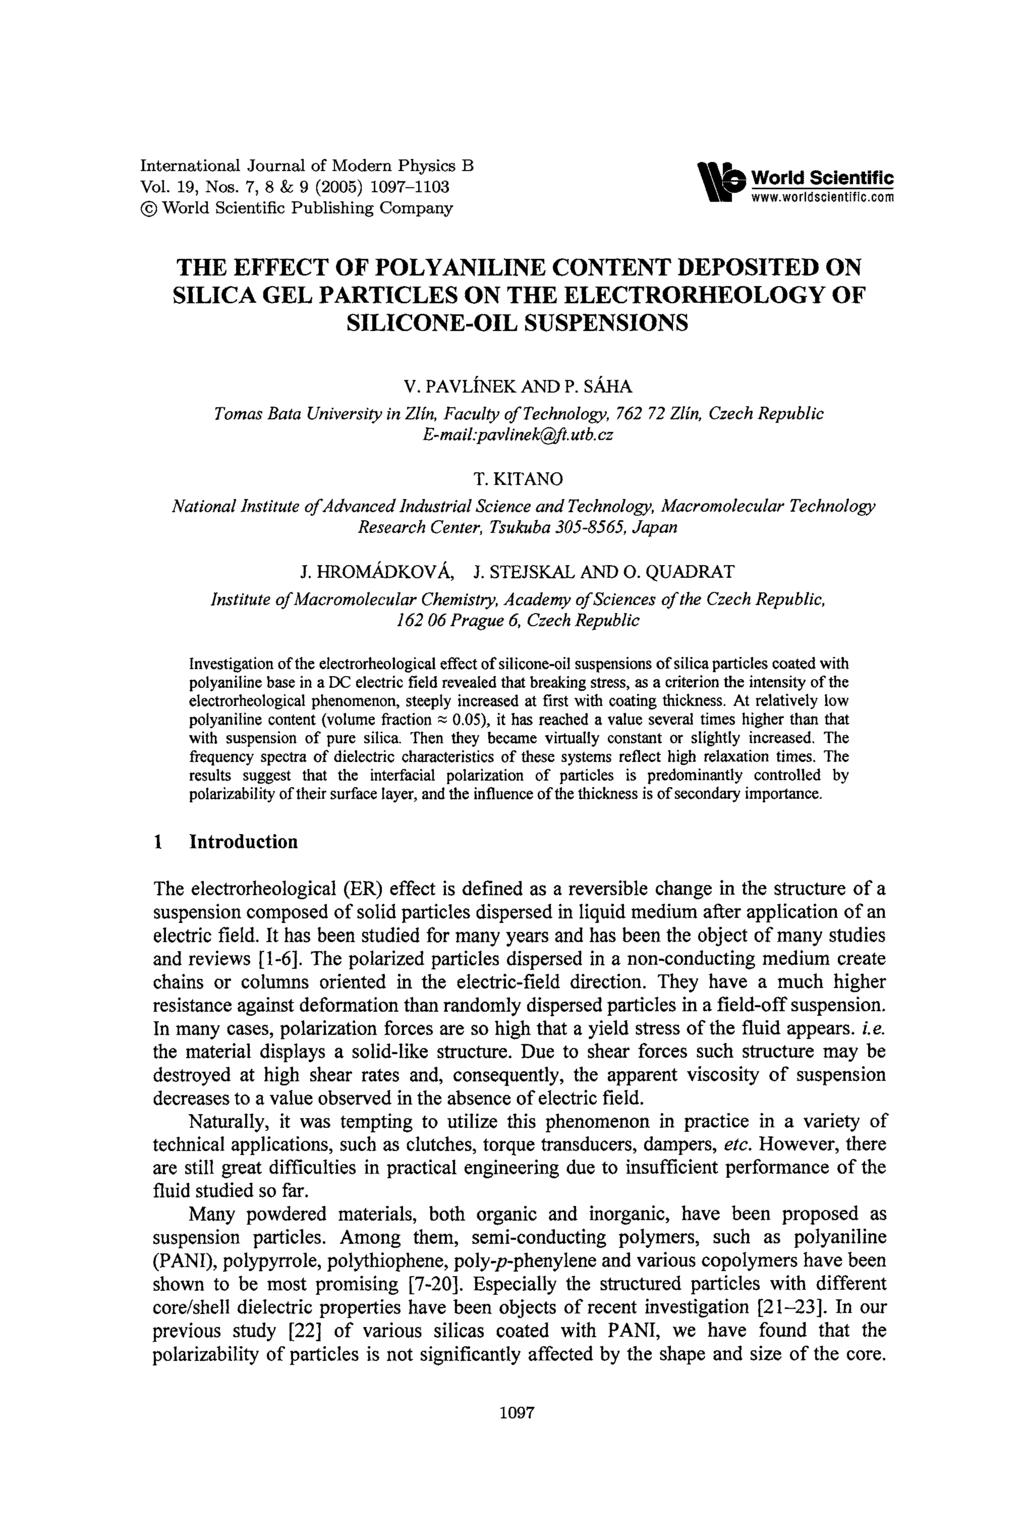 International Journal of Modern Physics B Vol. 19, Nos. 7,8 & 9 (25) 197-113 lli» World Scientific www.worldscieotific.